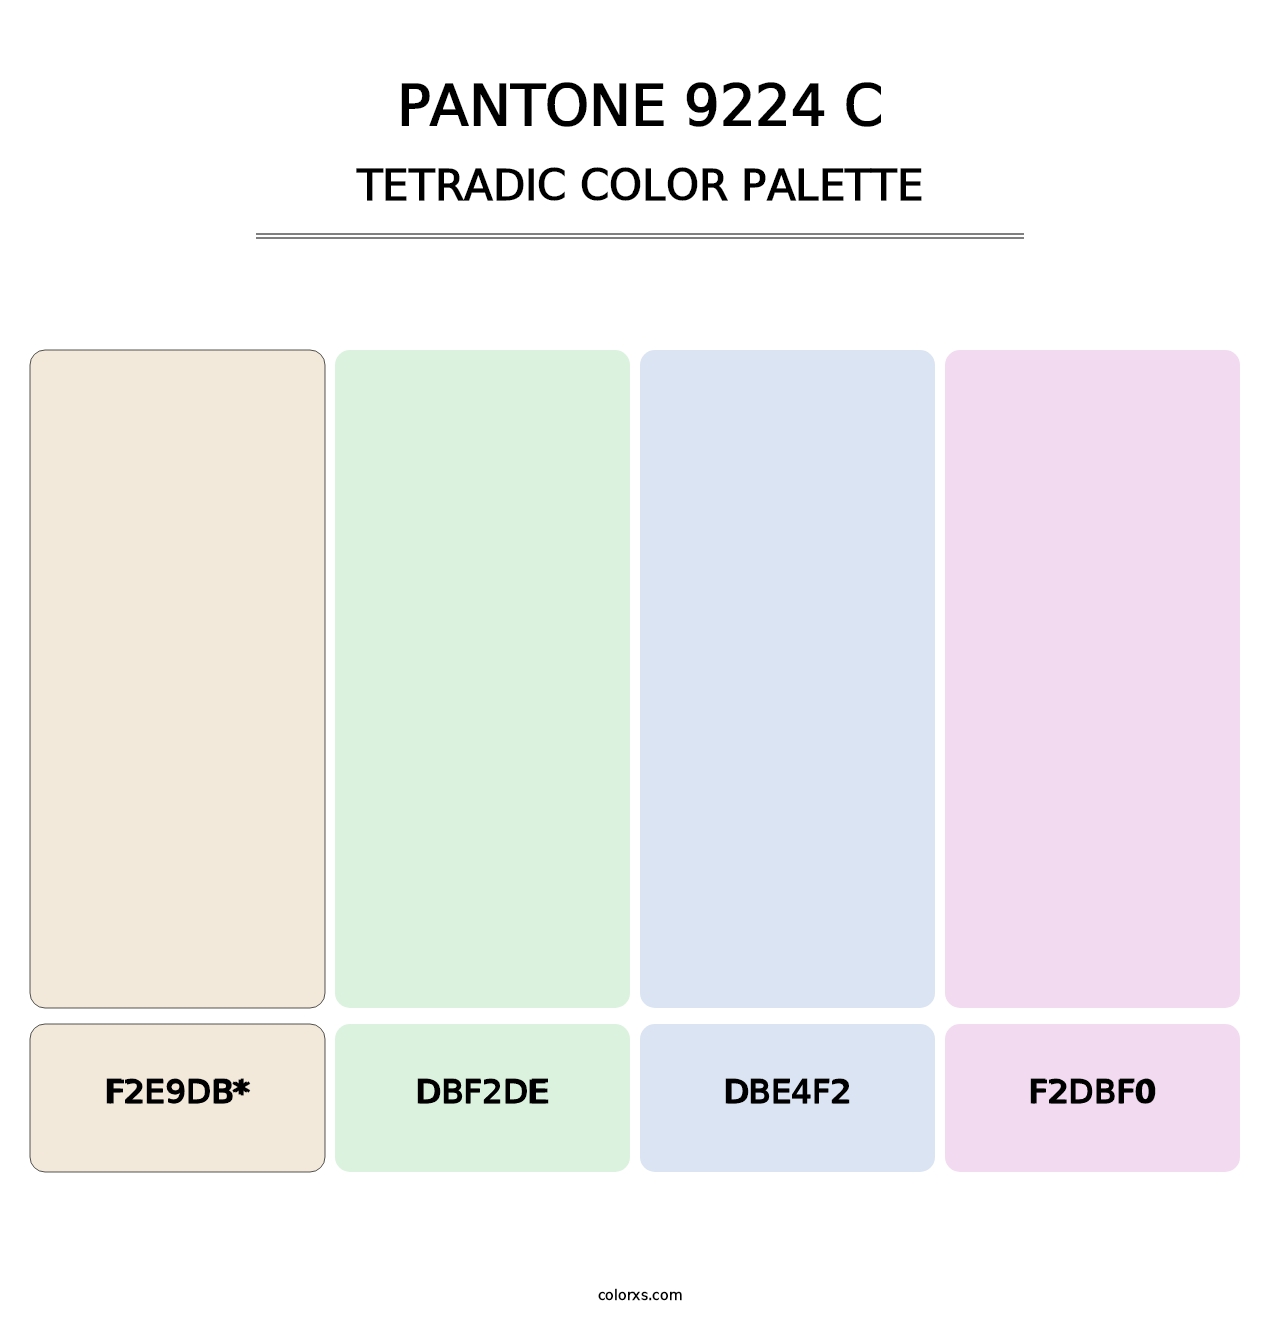 PANTONE 9224 C - Tetradic Color Palette